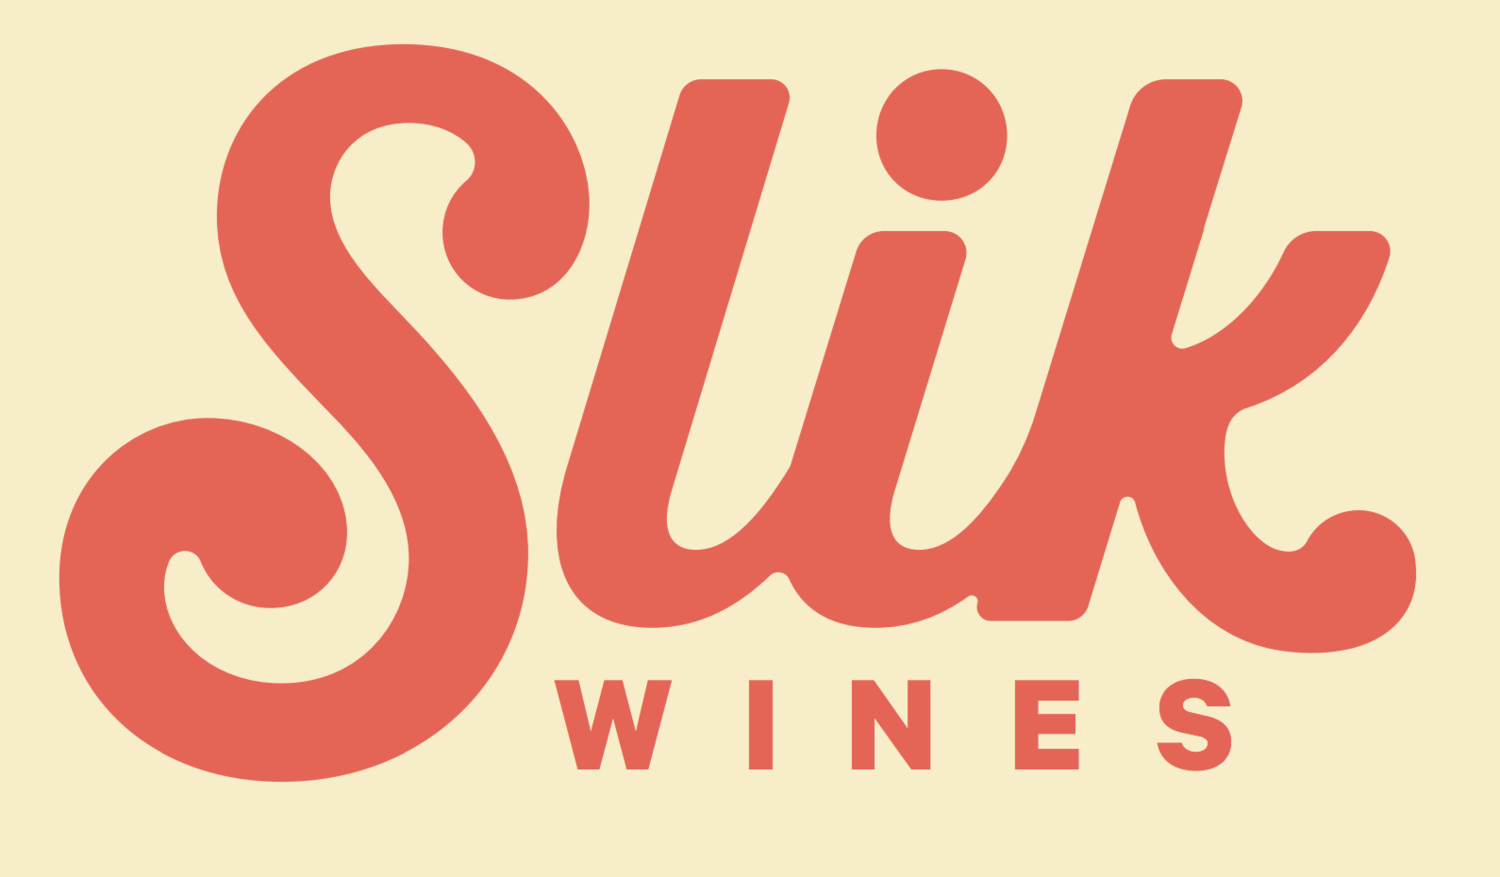 Slik Wines | No B.S. Approach To Wine